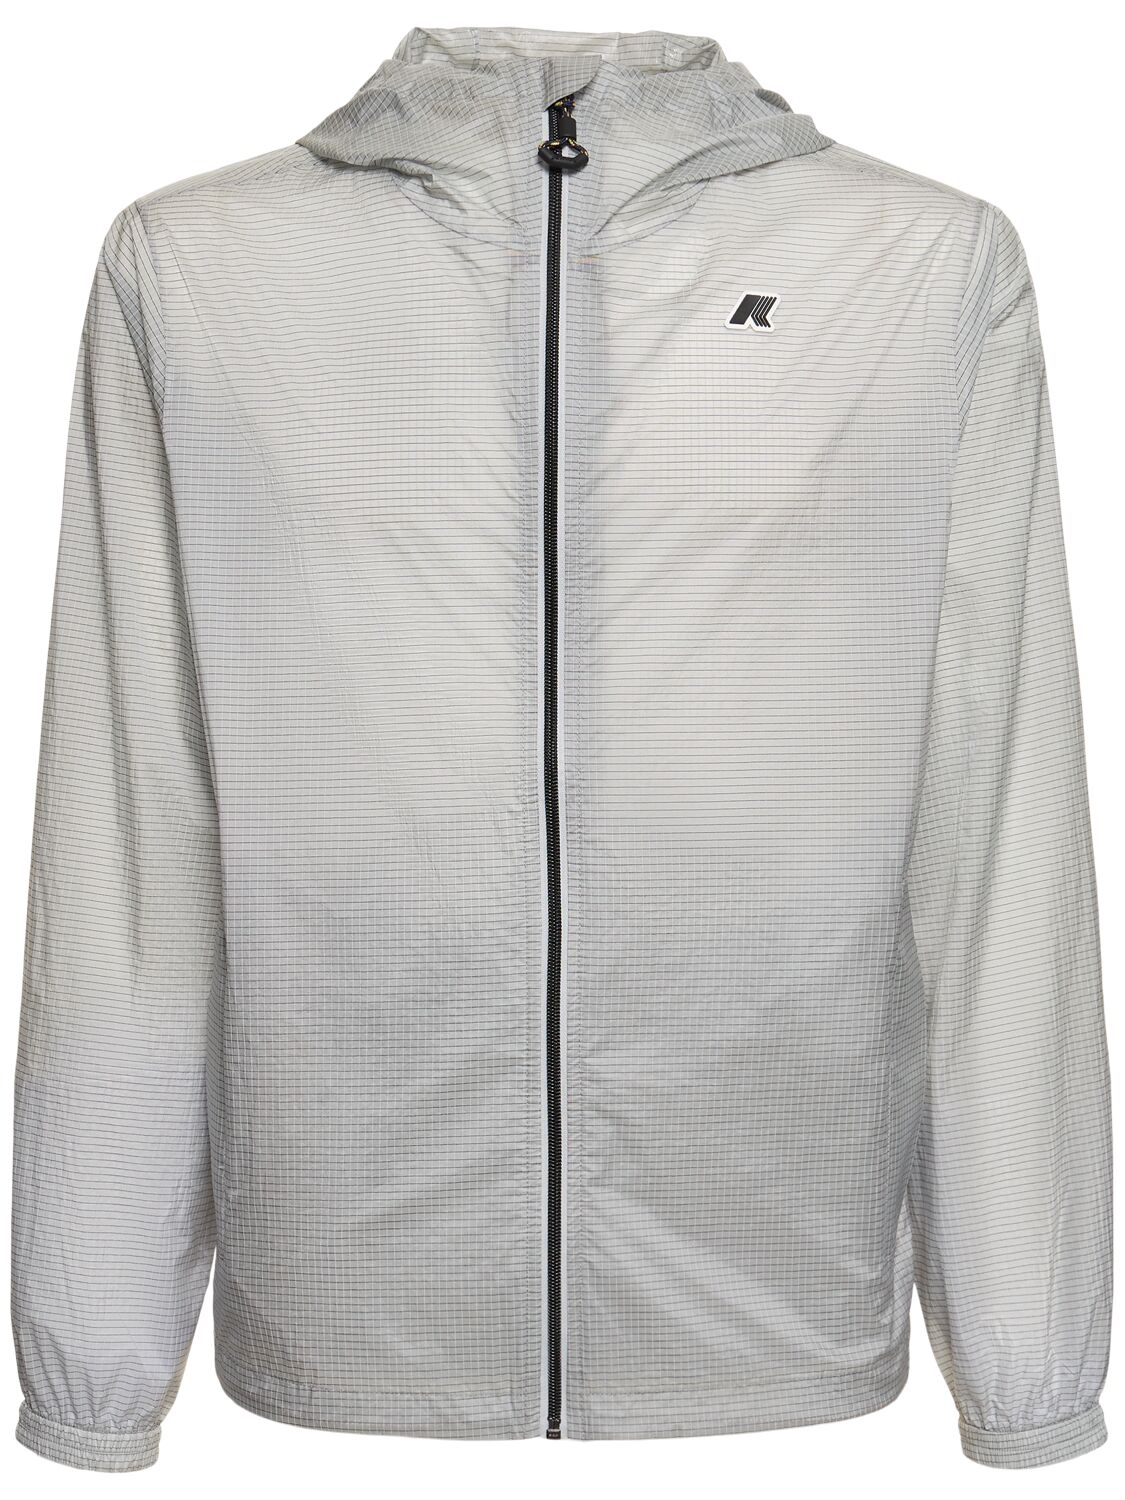 K-way Cleon Ripstop Jacket In Gray